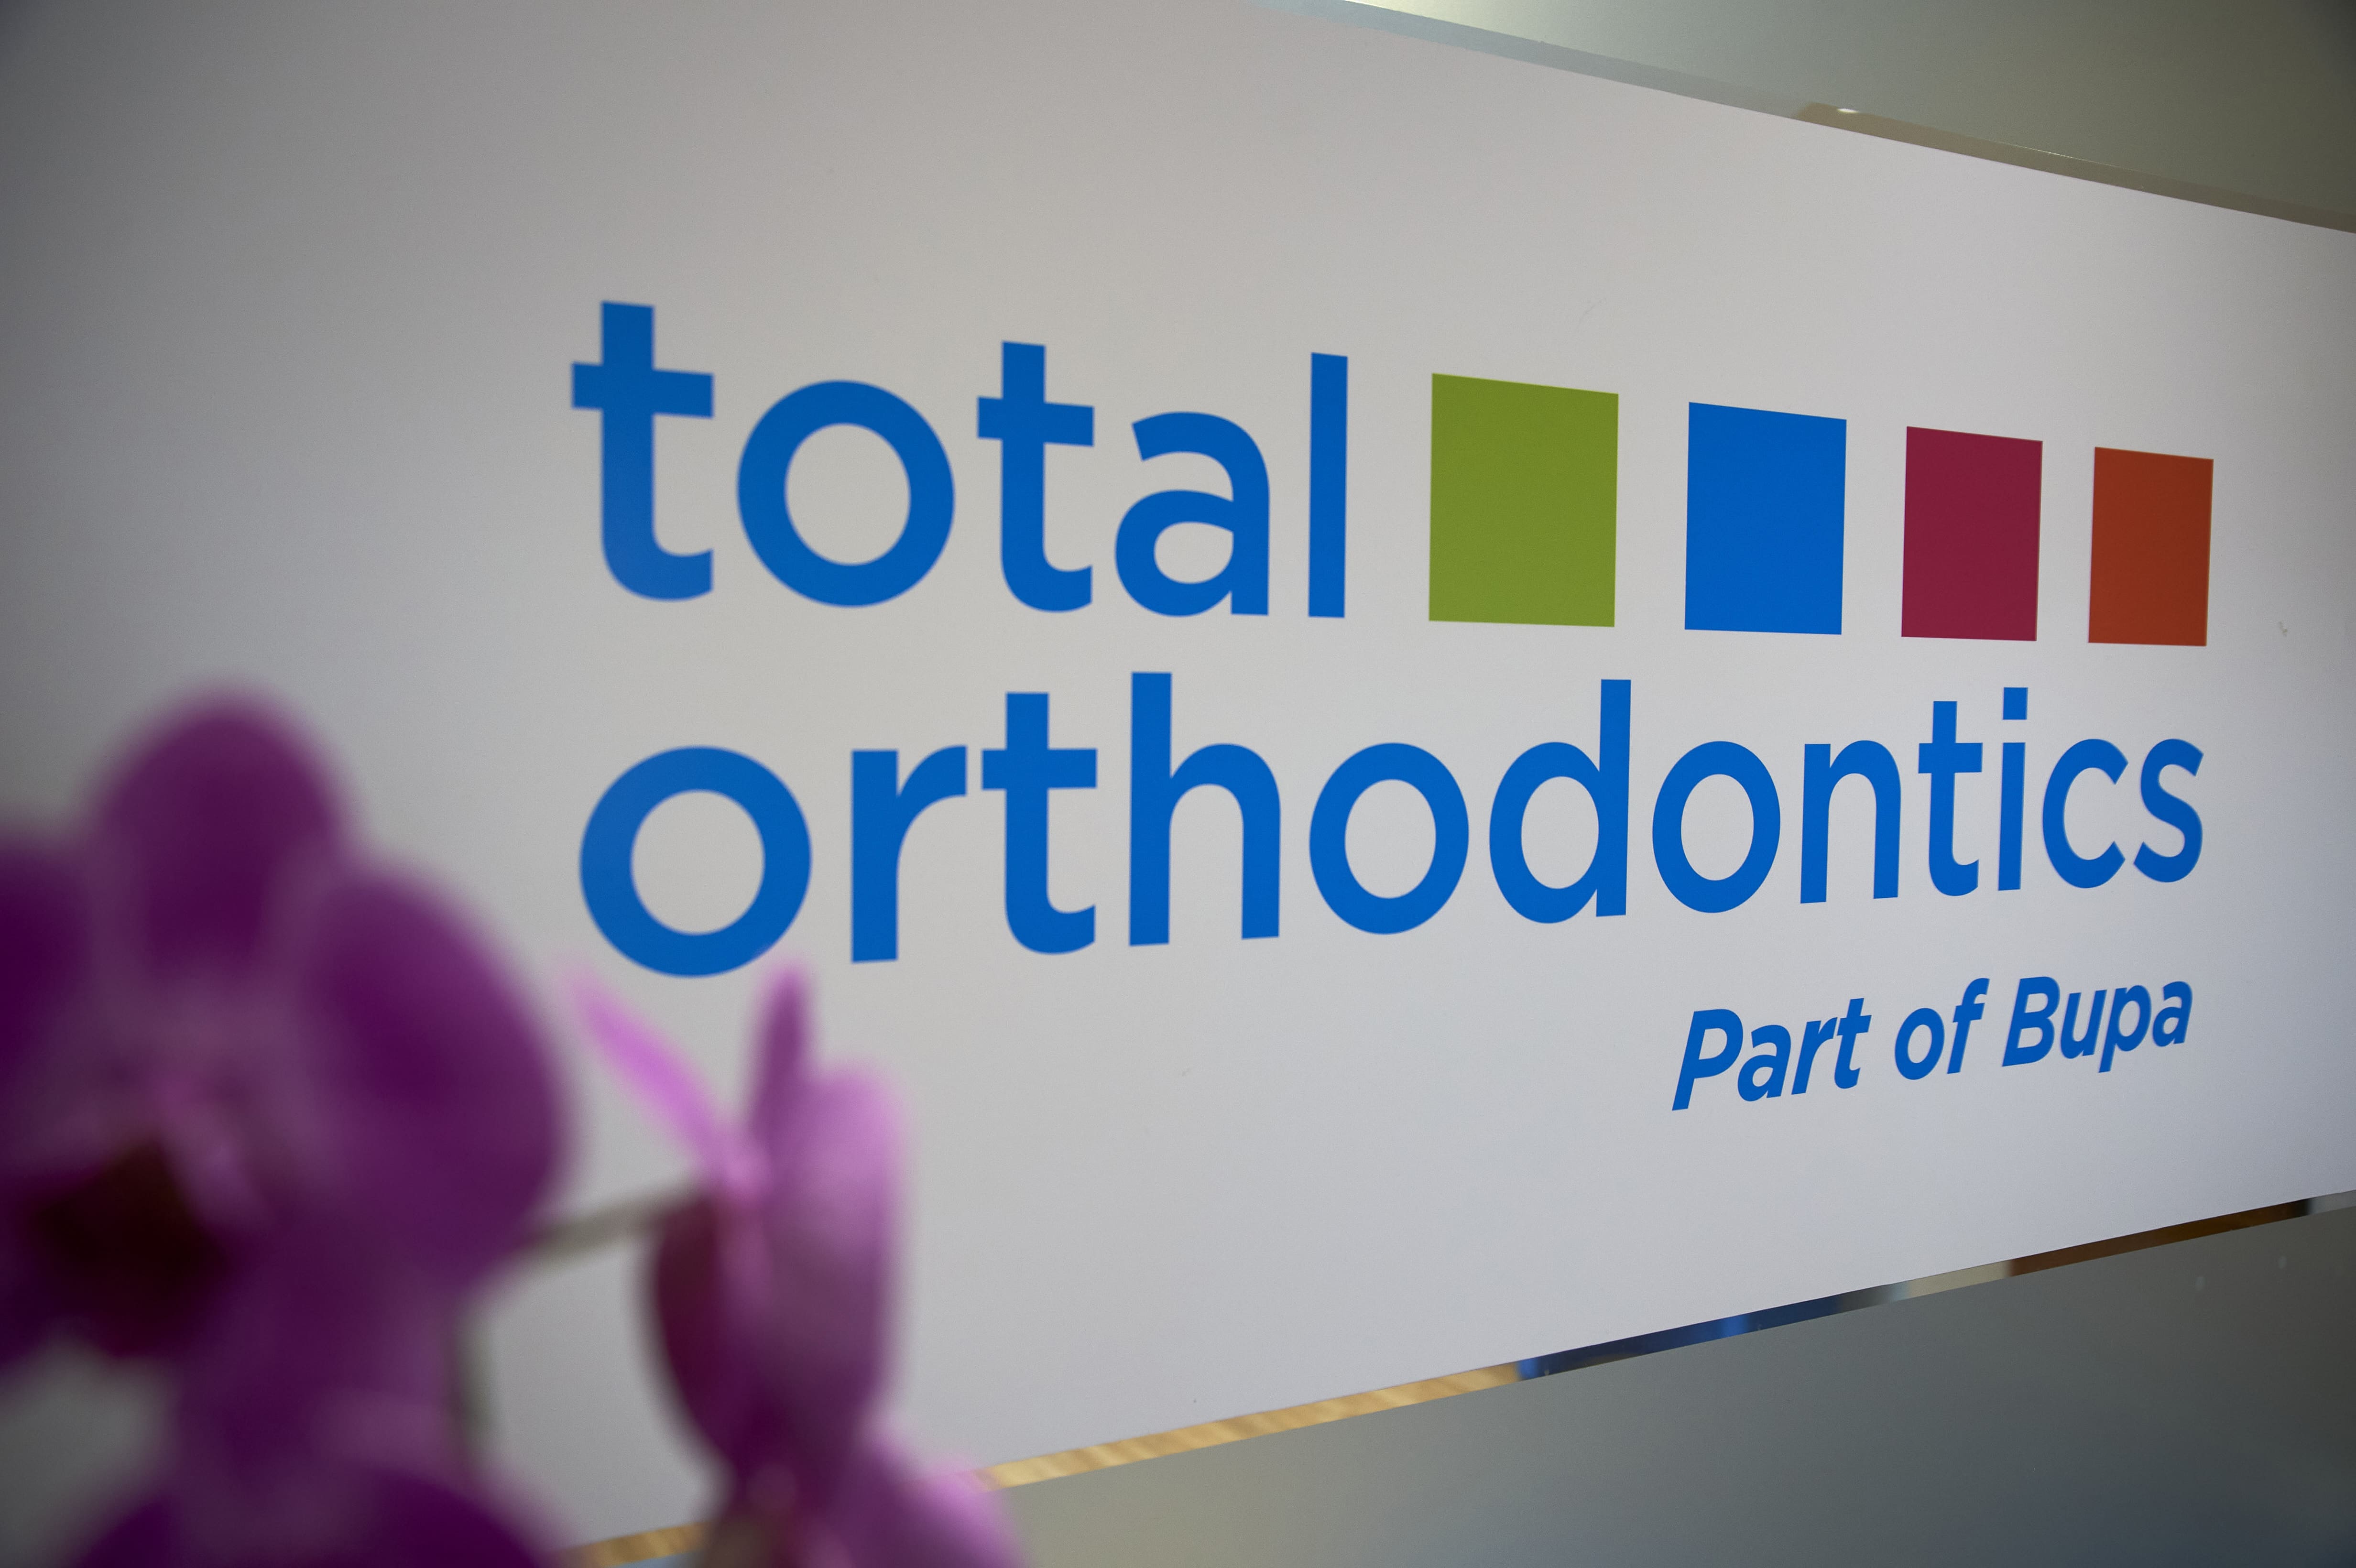 Total Orthodontics Maidstone Maidstone 01622 737666